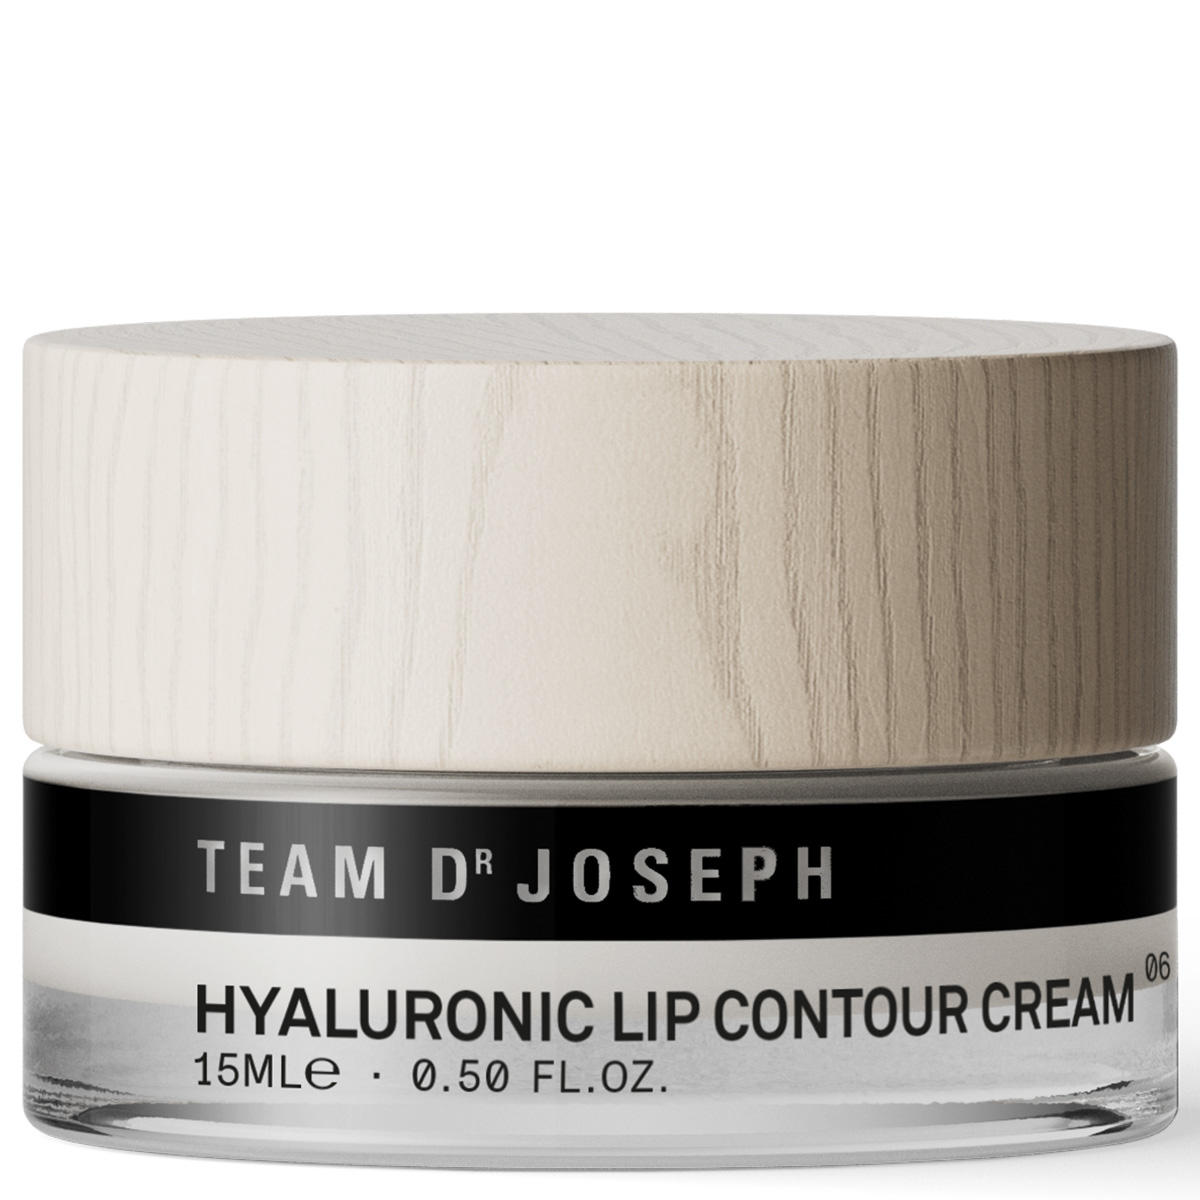 TEAM DR JOSEPH Hyaluronic Lip Contour Cream 15 ml - 1